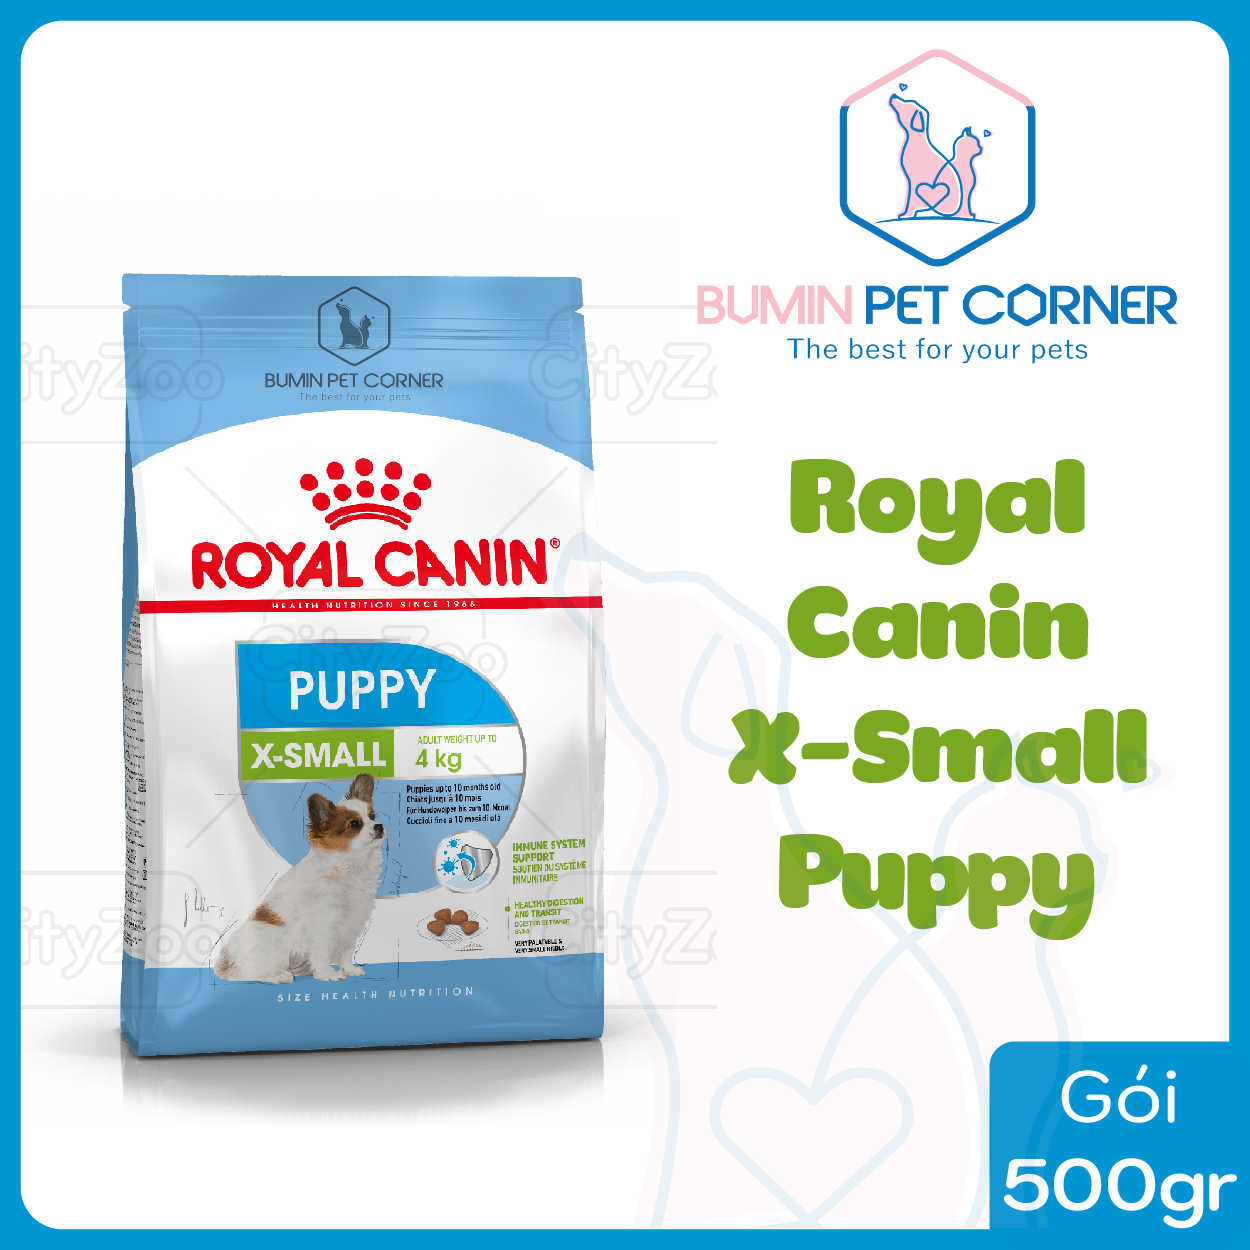 Royal Canin X-Small Puppy - Bumin Pet Corner